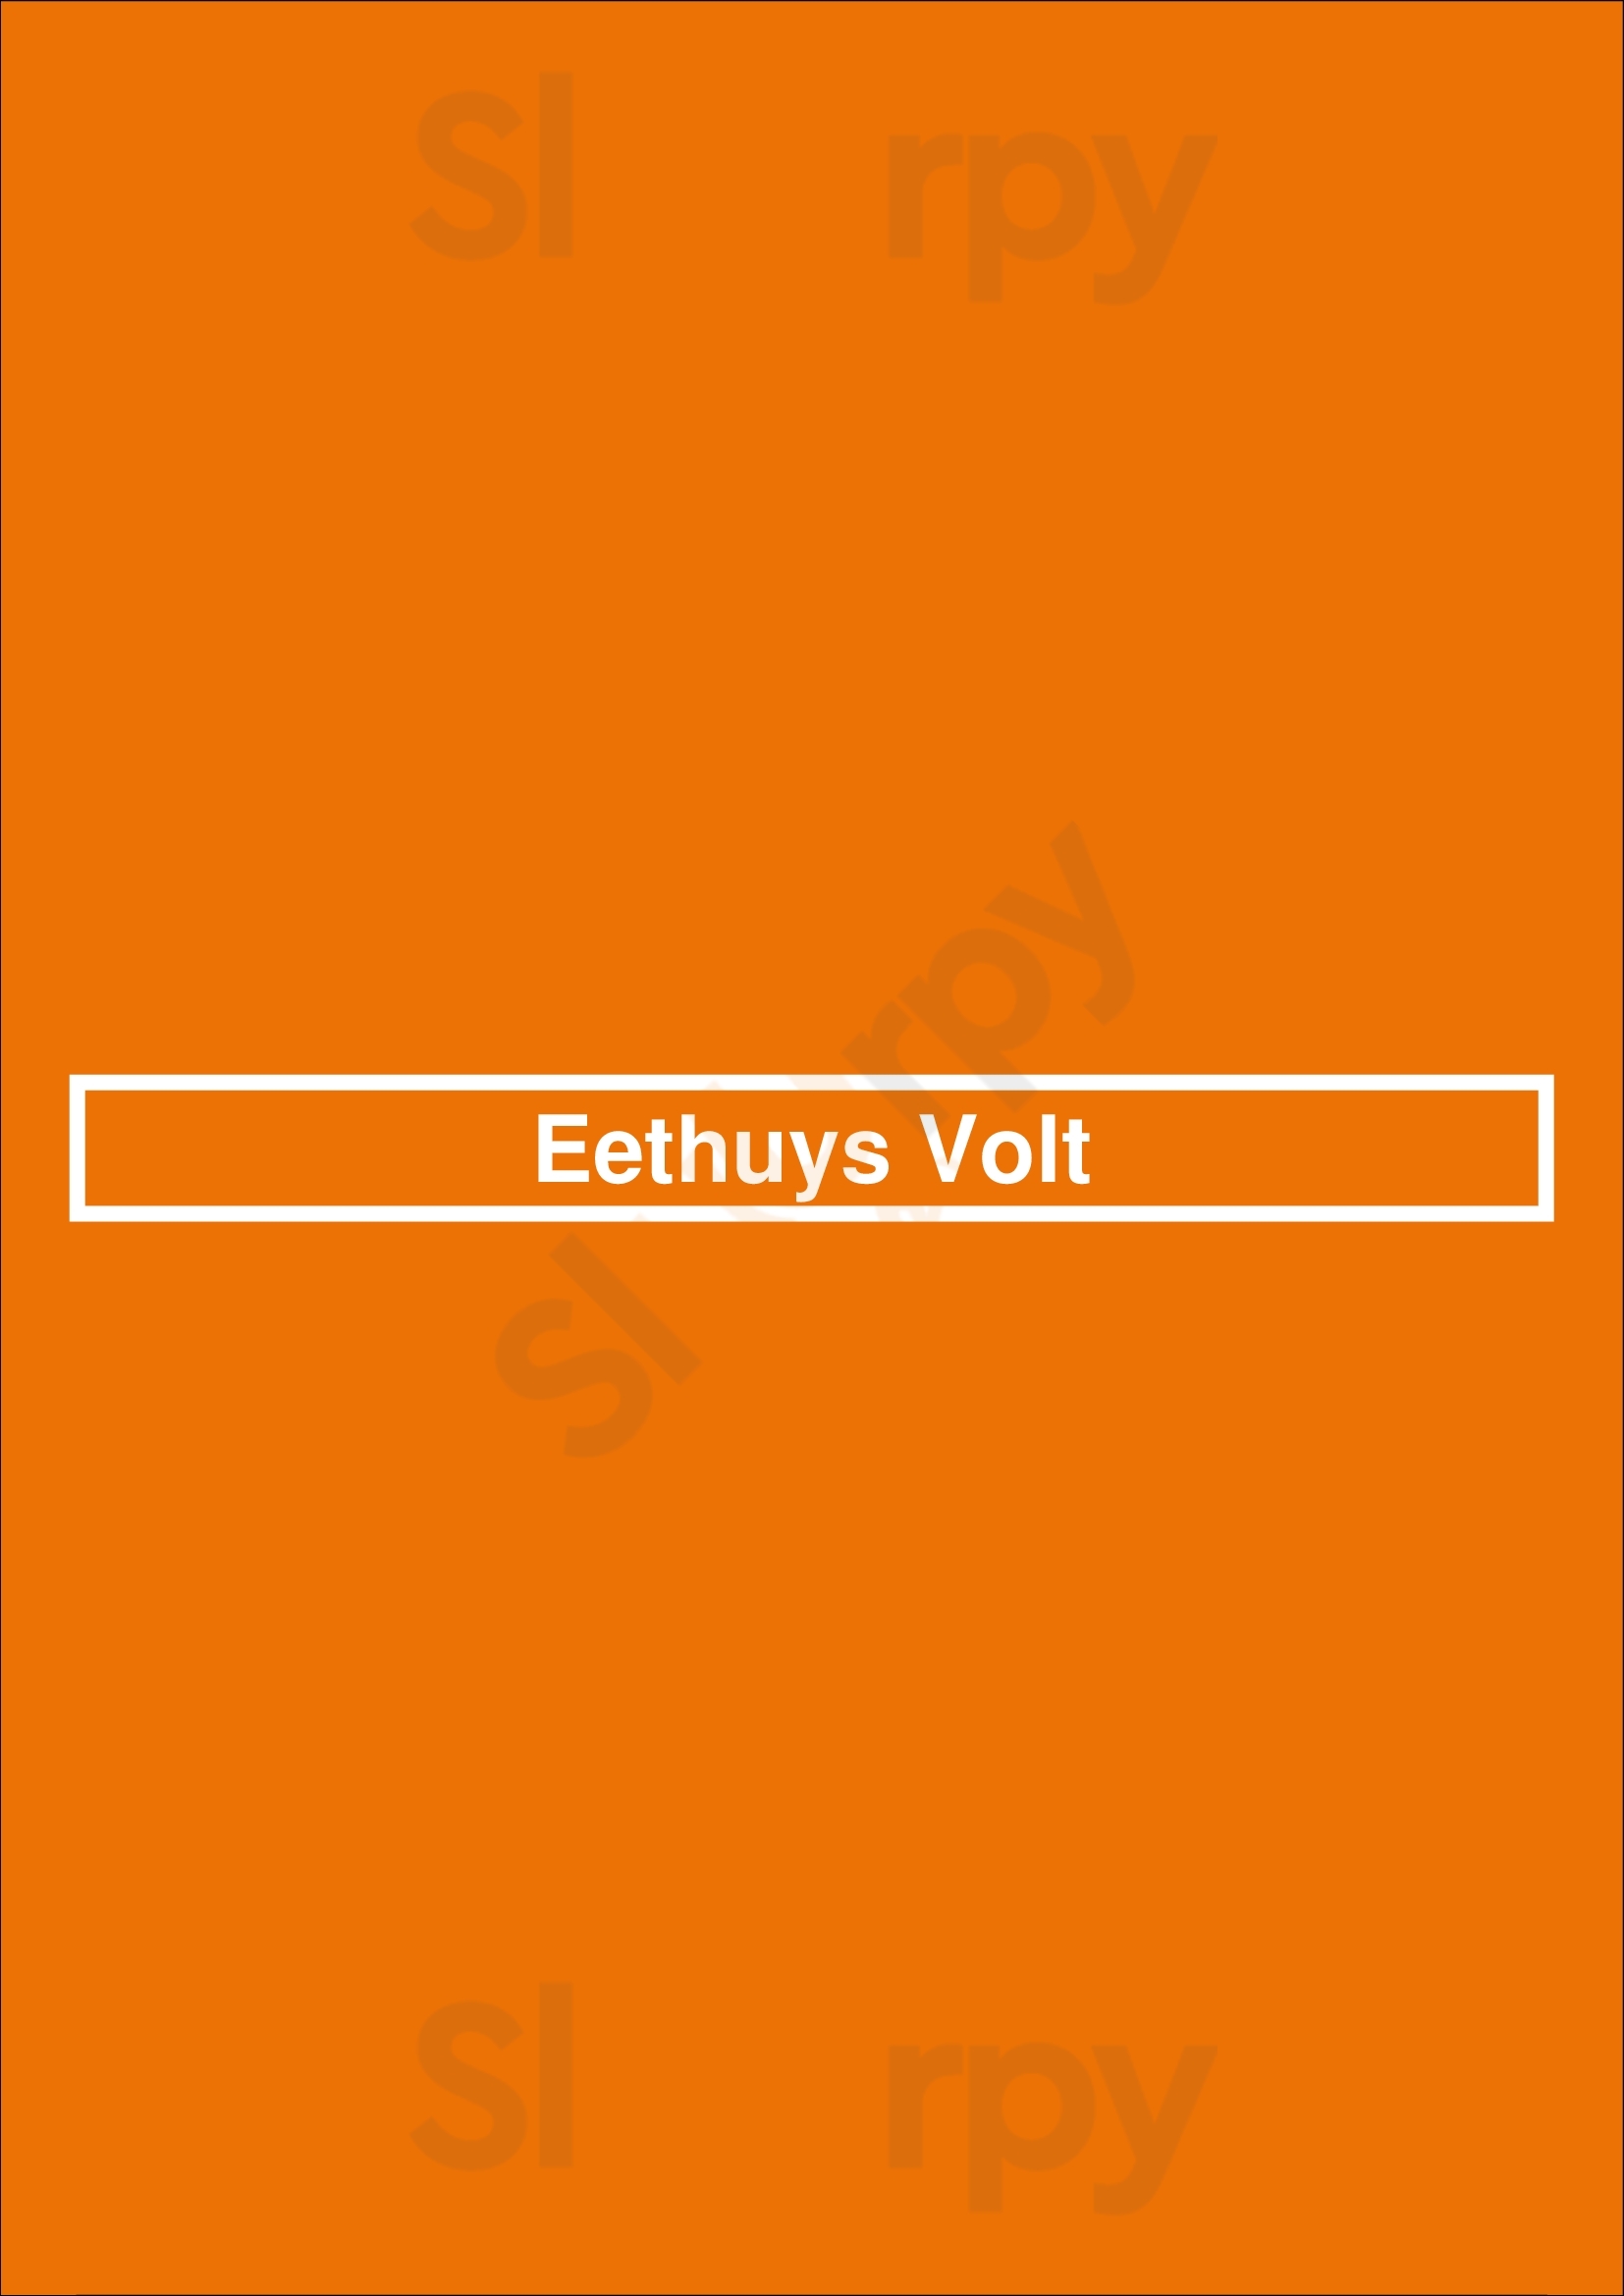 Eethuys Volt Tilburg Menu - 1